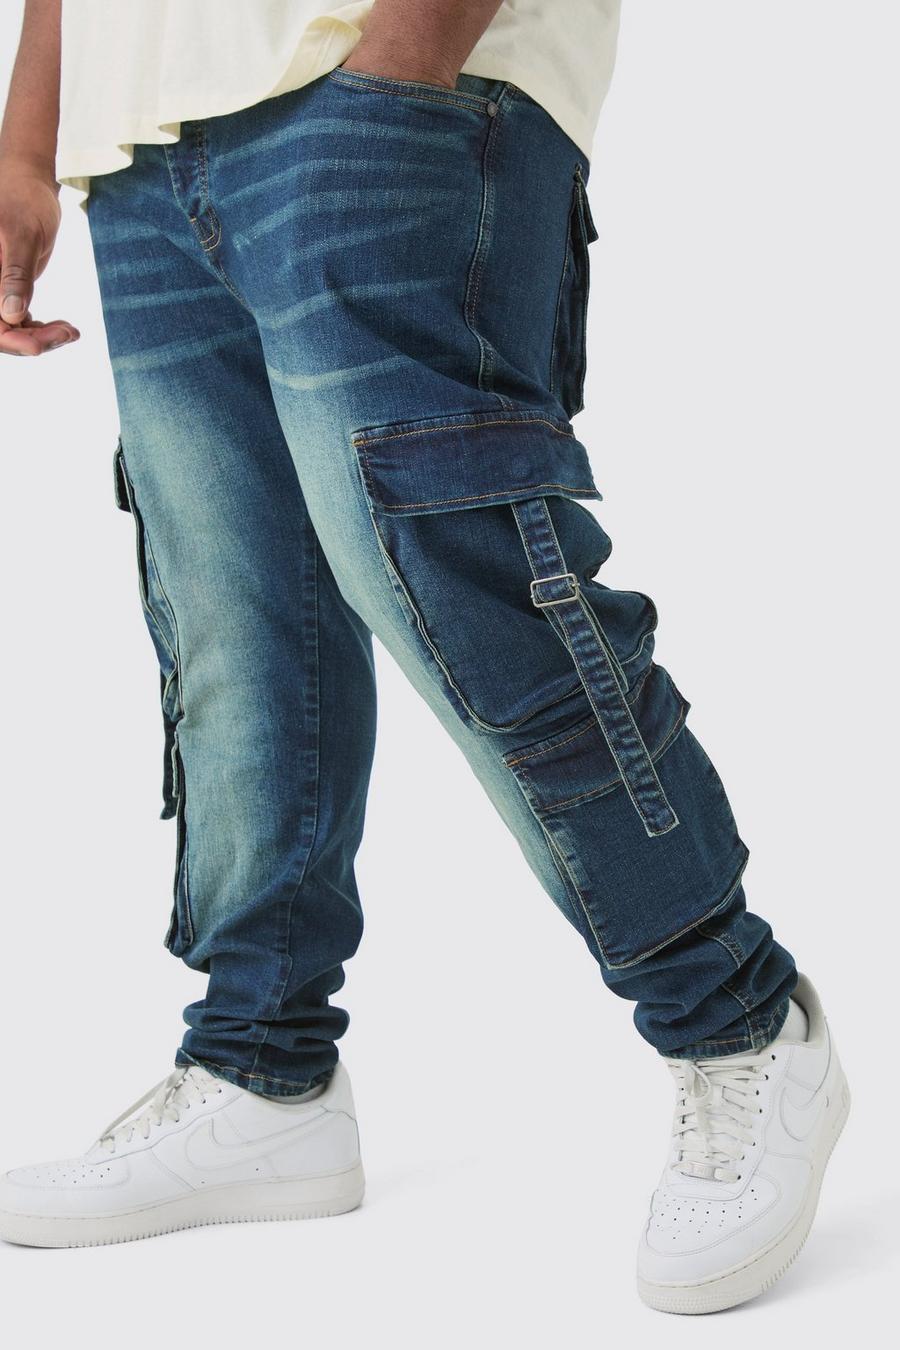 Jeans Plus Size in Stretch Skinny Fit in lavaggio scuro con tasche Cargo, Dark wash image number 1